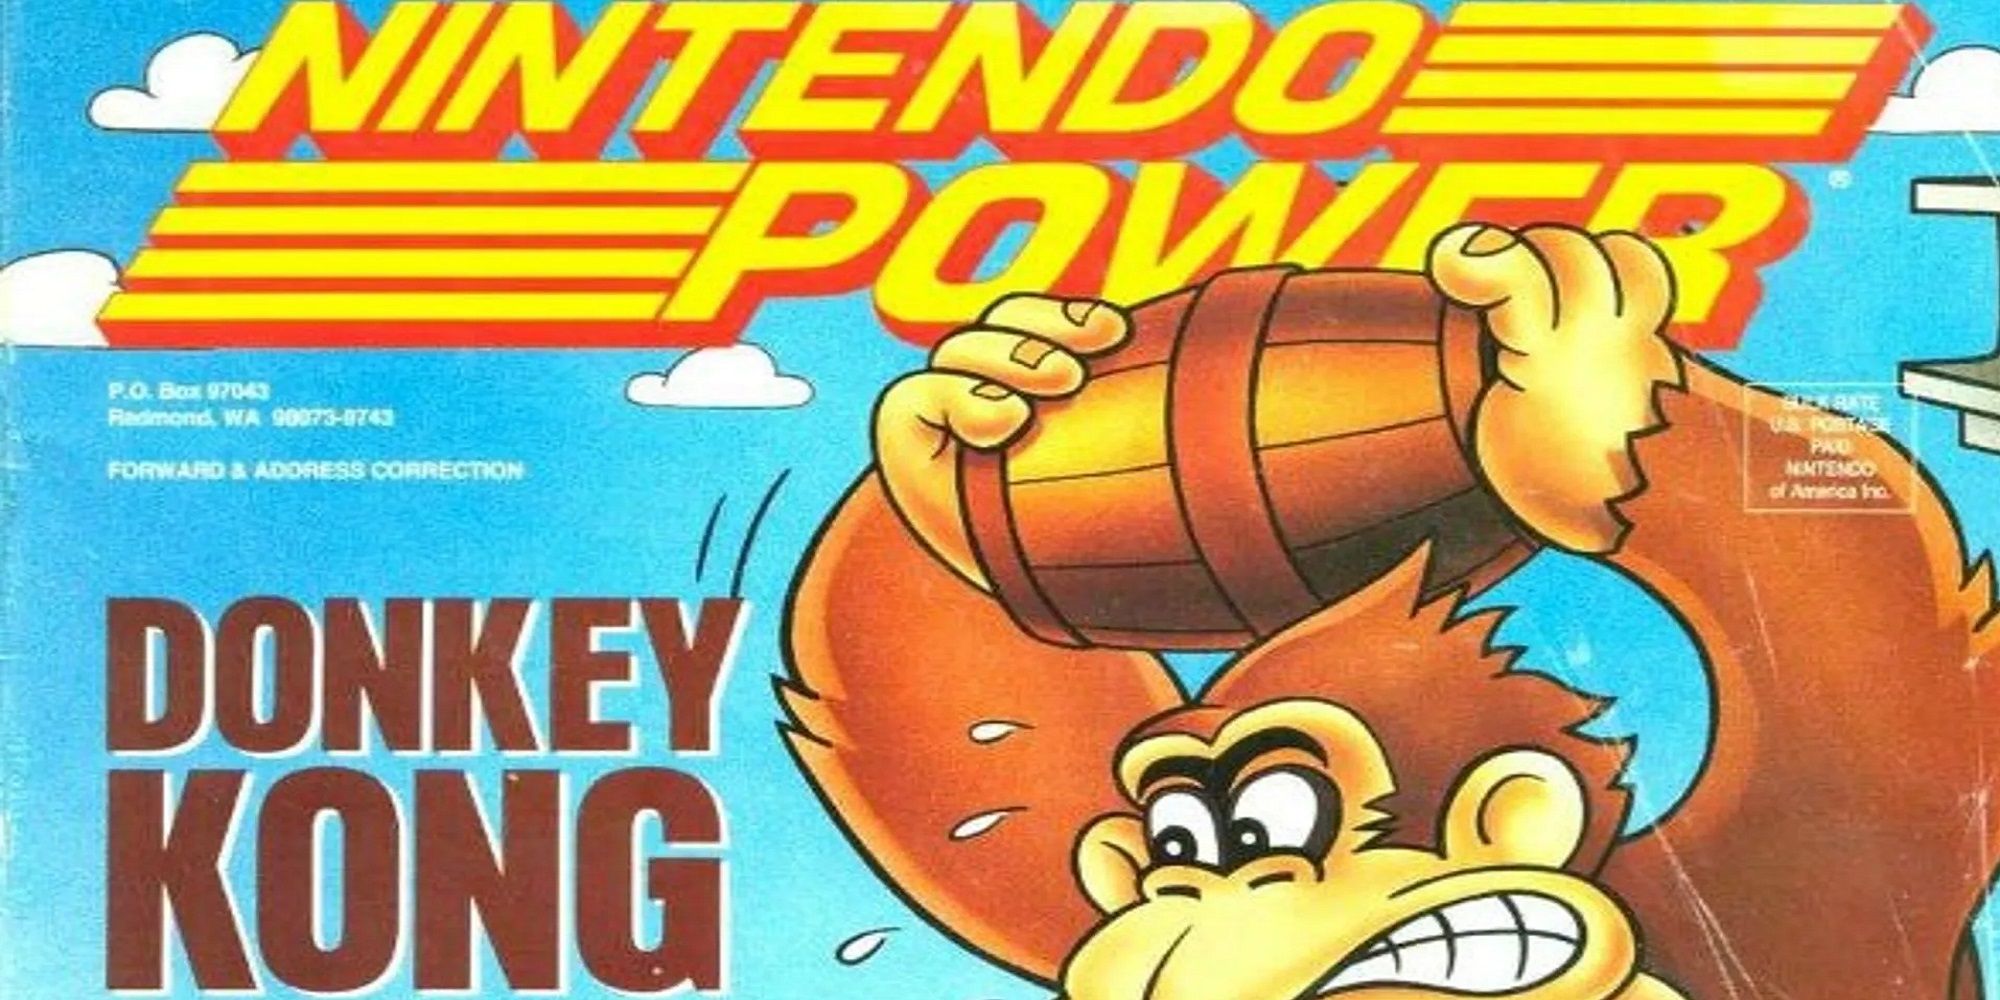 Couverture Nintendo Power avec Donkey Kong